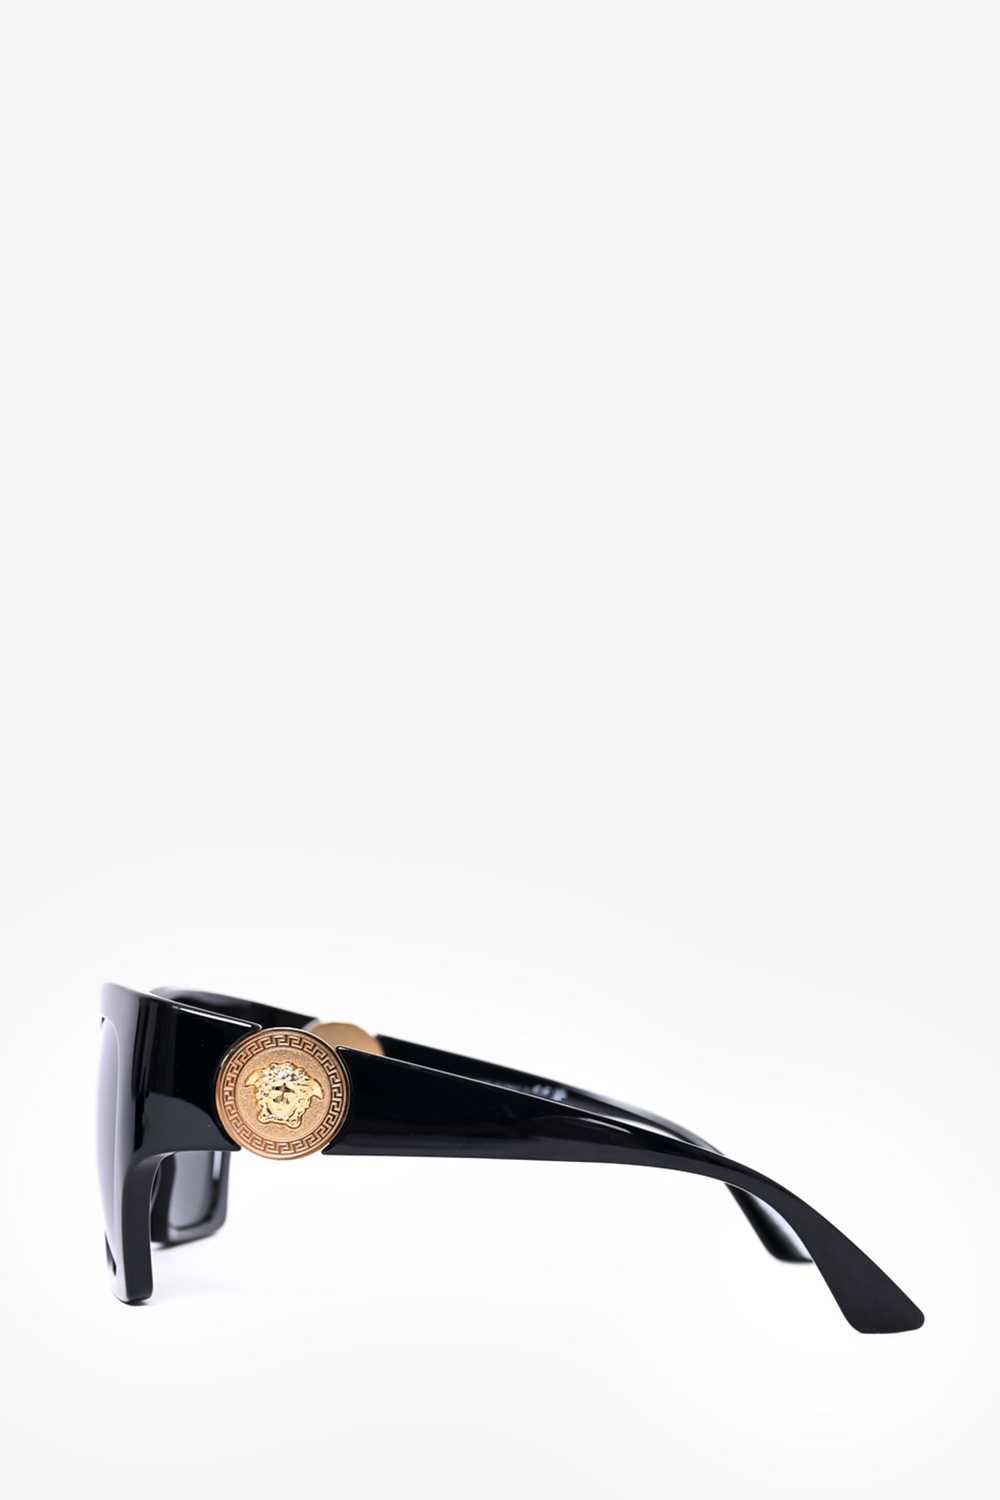 Versace Black Medusa Square Frame Sunglasses - image 3